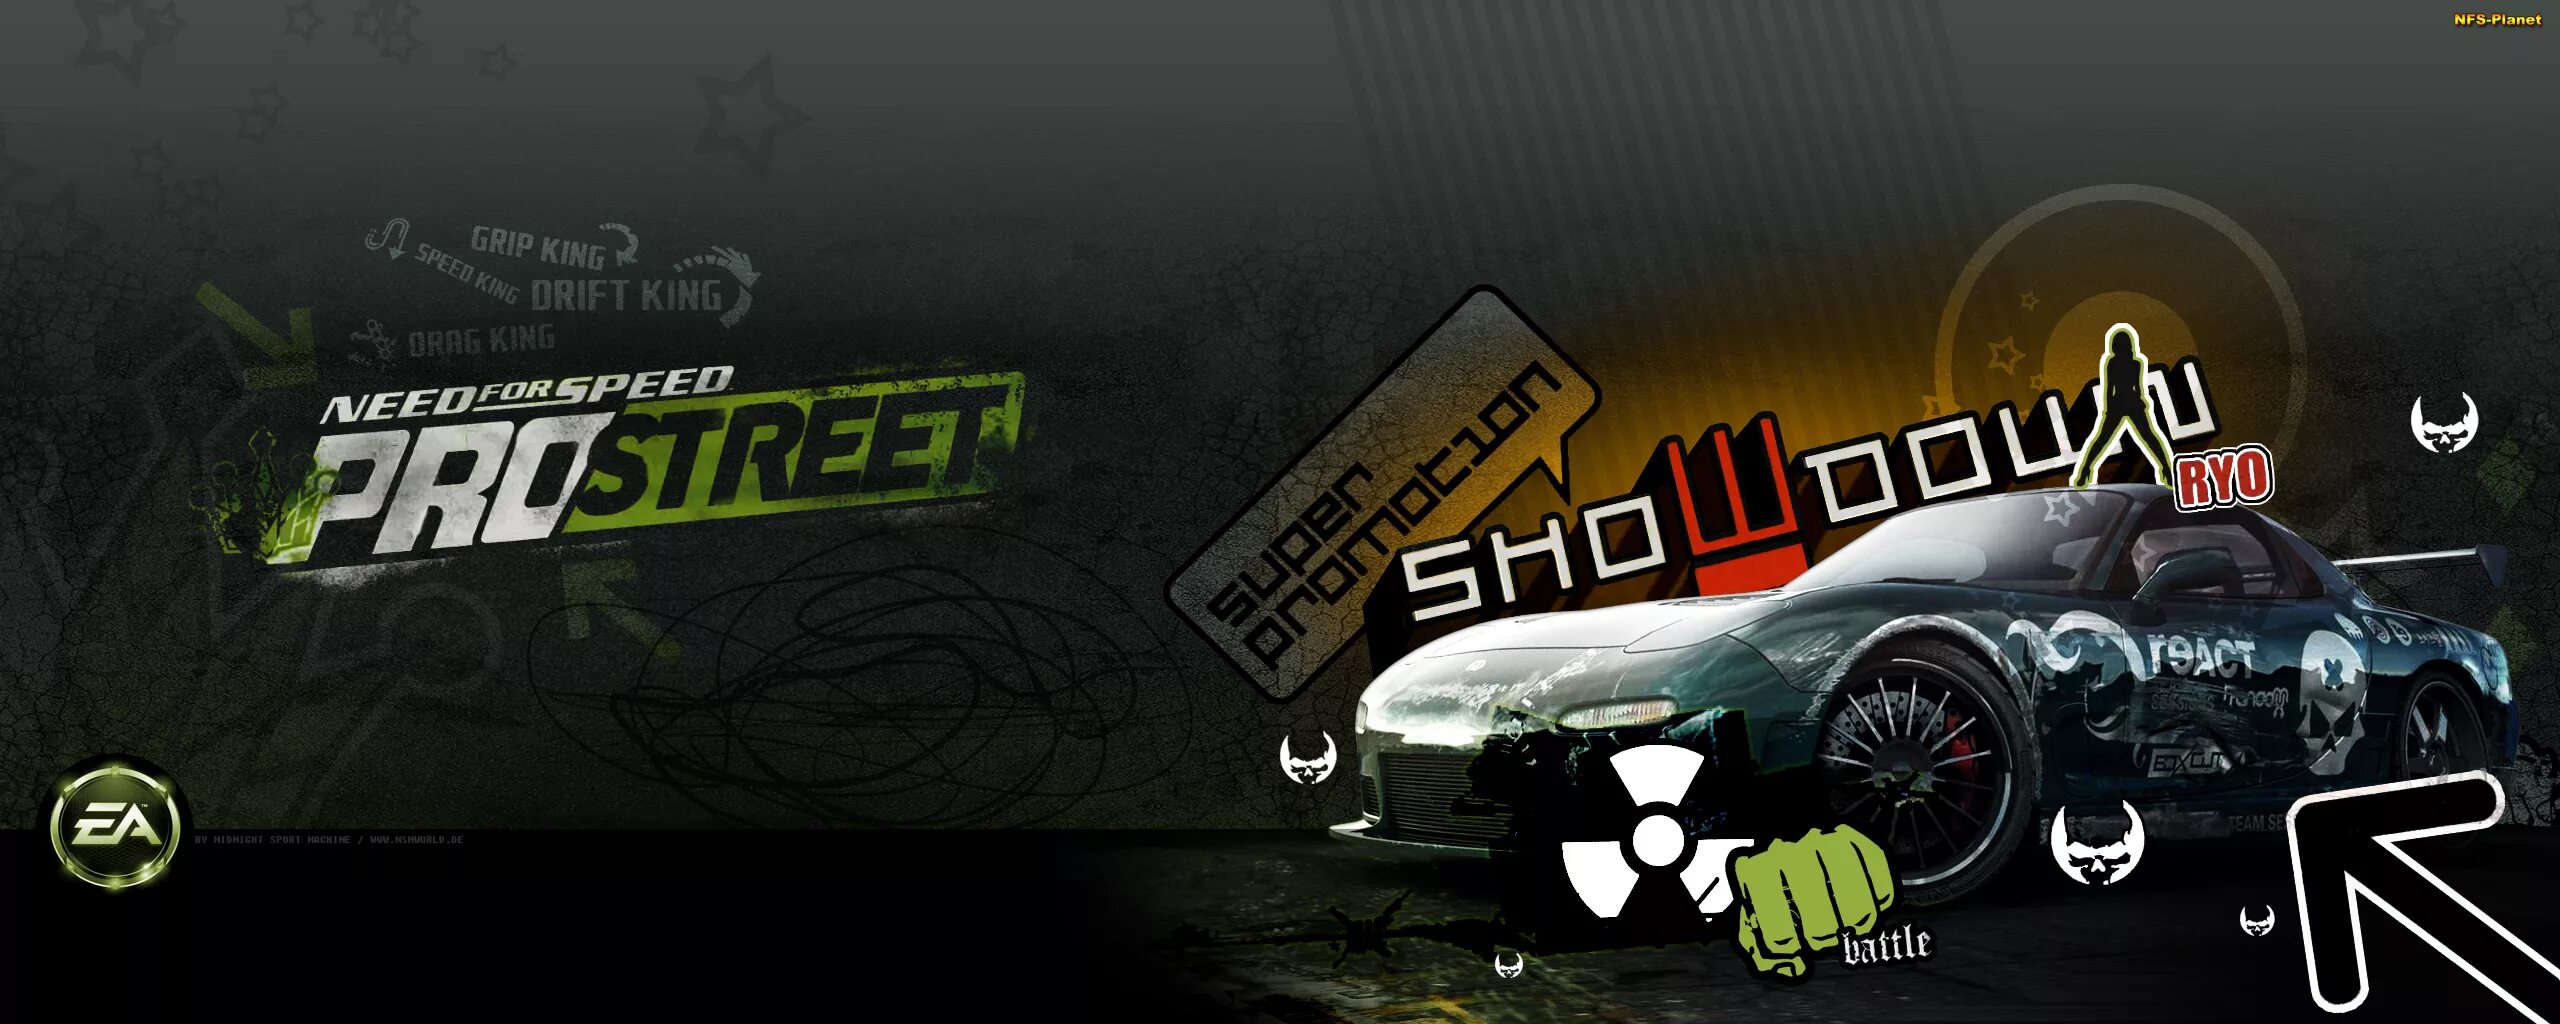 Pro speed up. NFS Pro Street обложка. NFS 2007 Pro Street обложка. Обложка на диск ps2 NFS Pro Street. Need for Speed Pro Street Xbox 360 обложка.